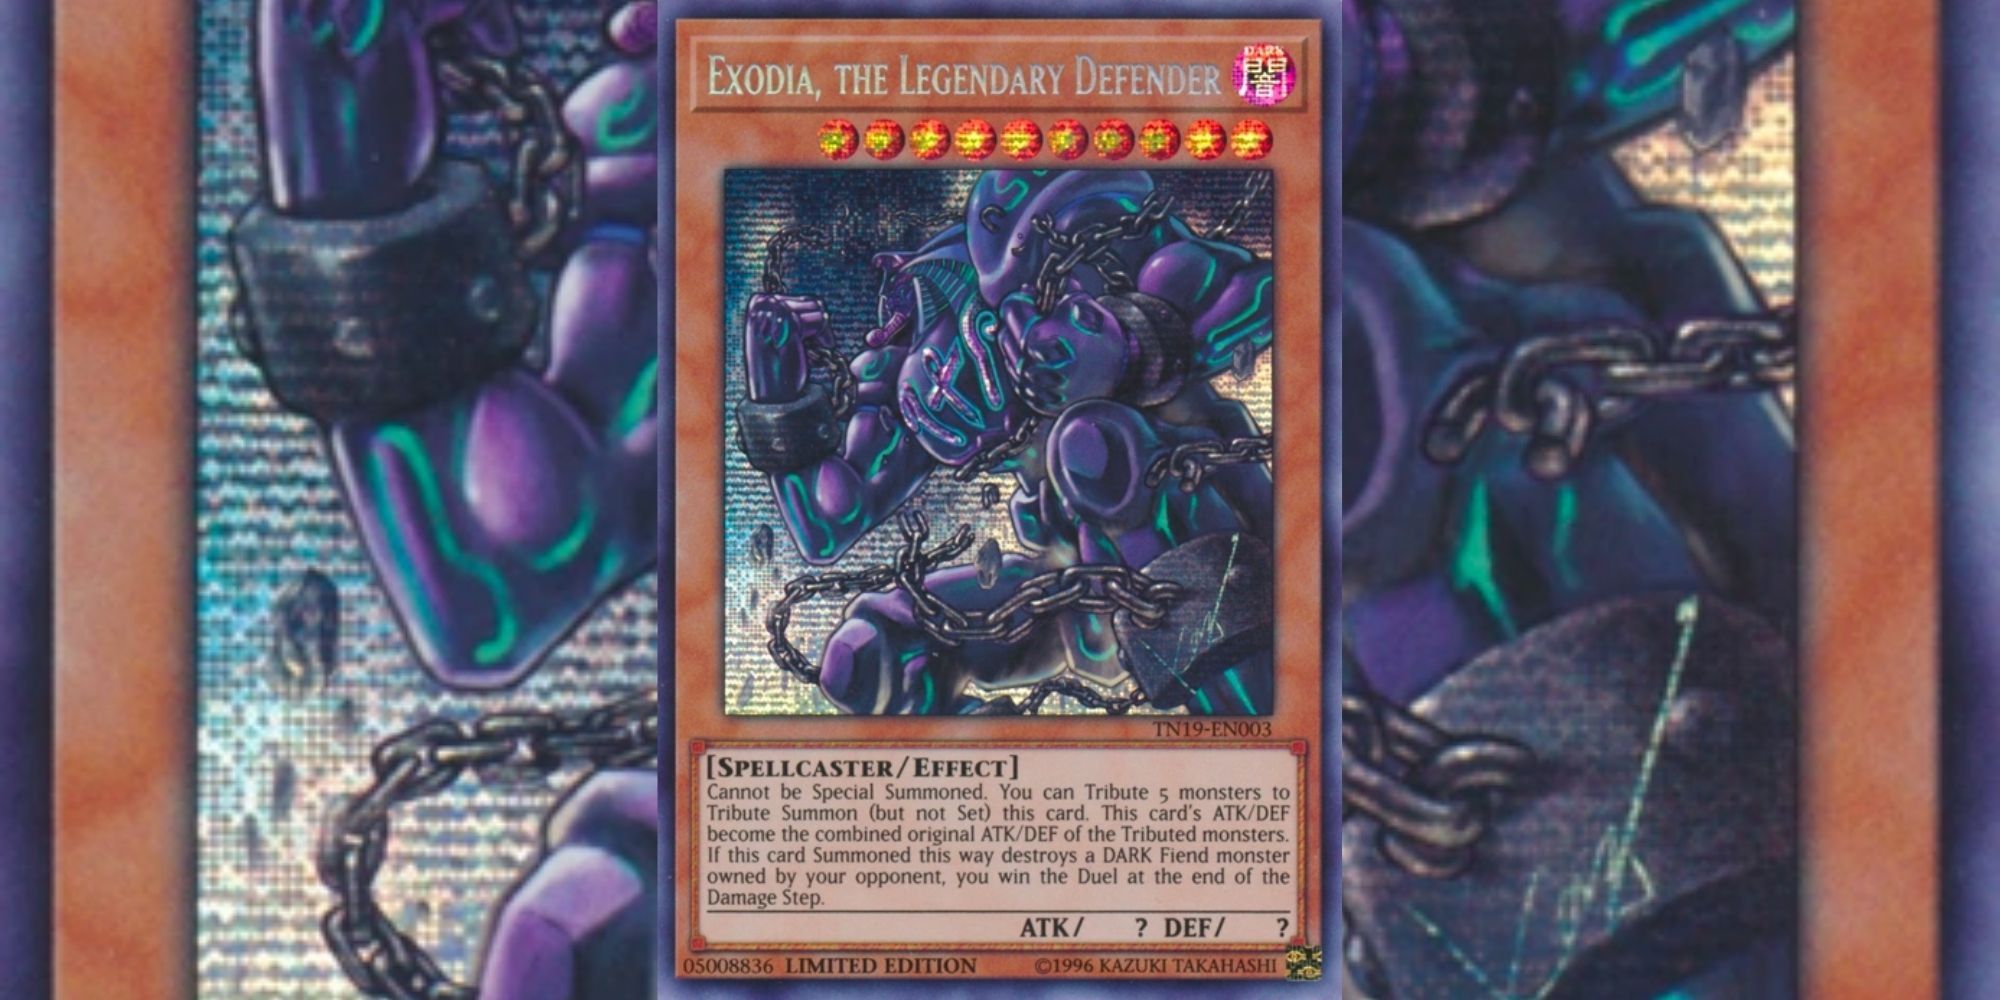 Exodia, The Legendary Defender card in Yu-Gi-Oh!